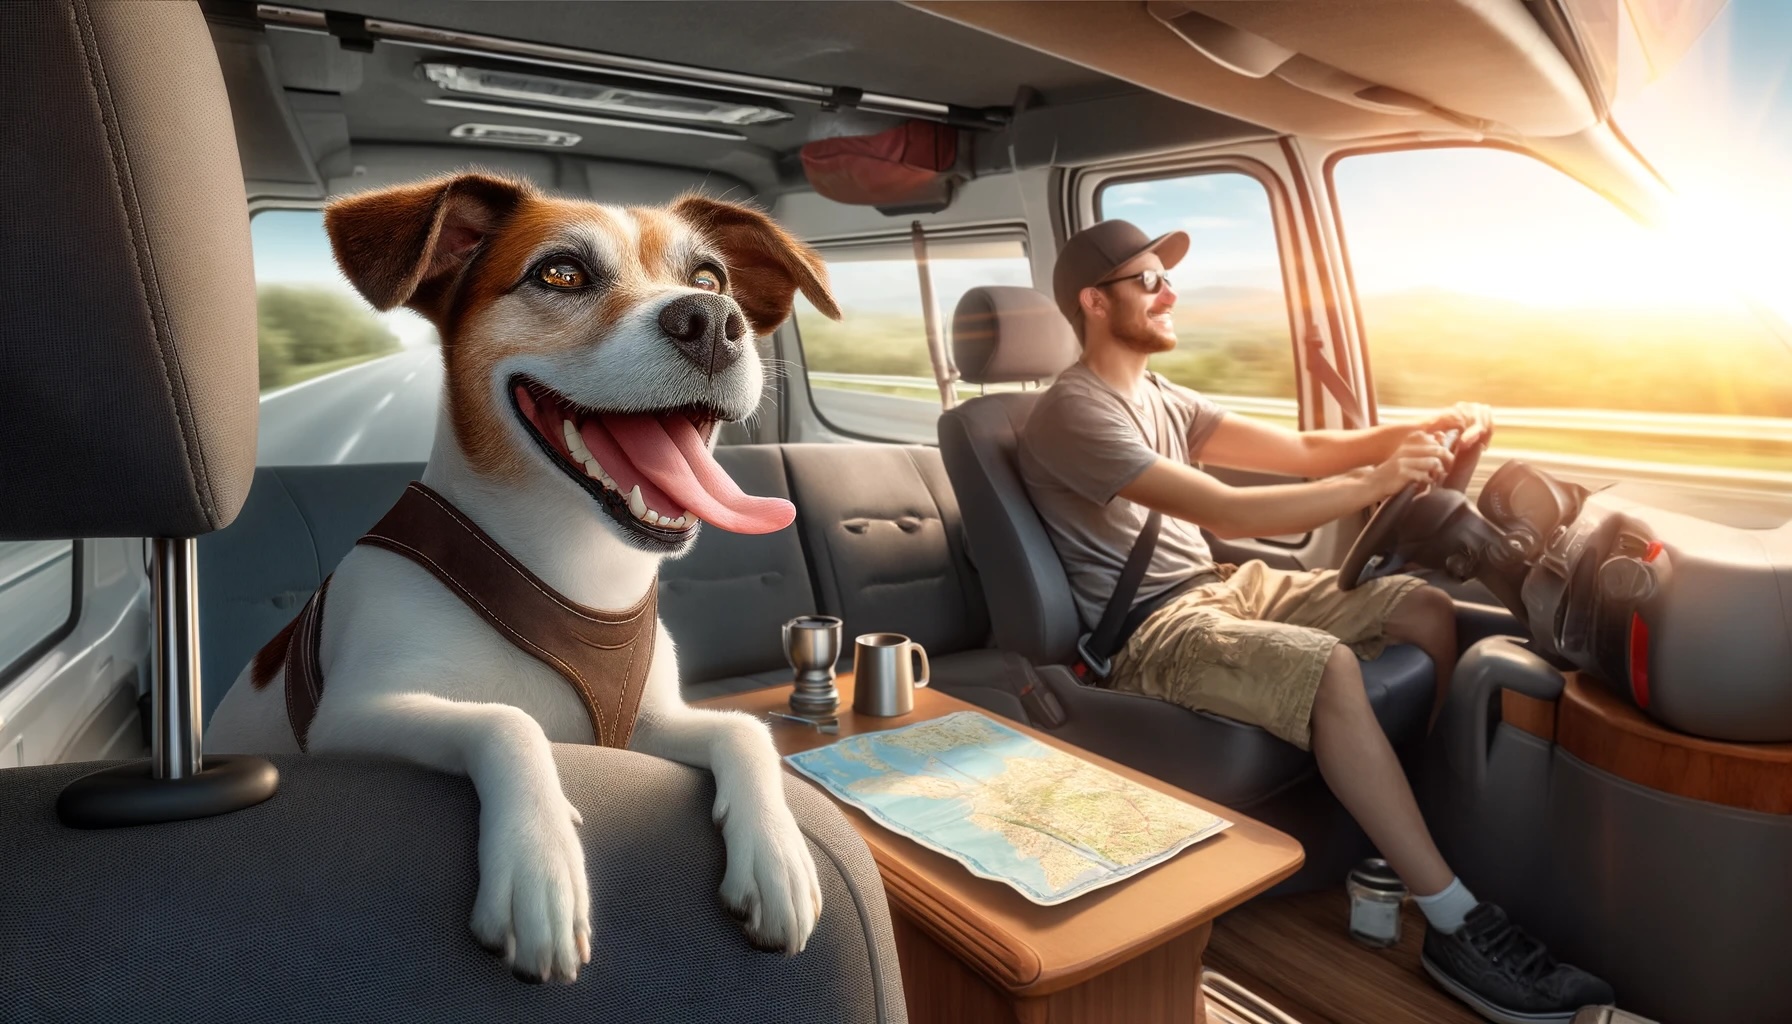 Dog in camper van with human